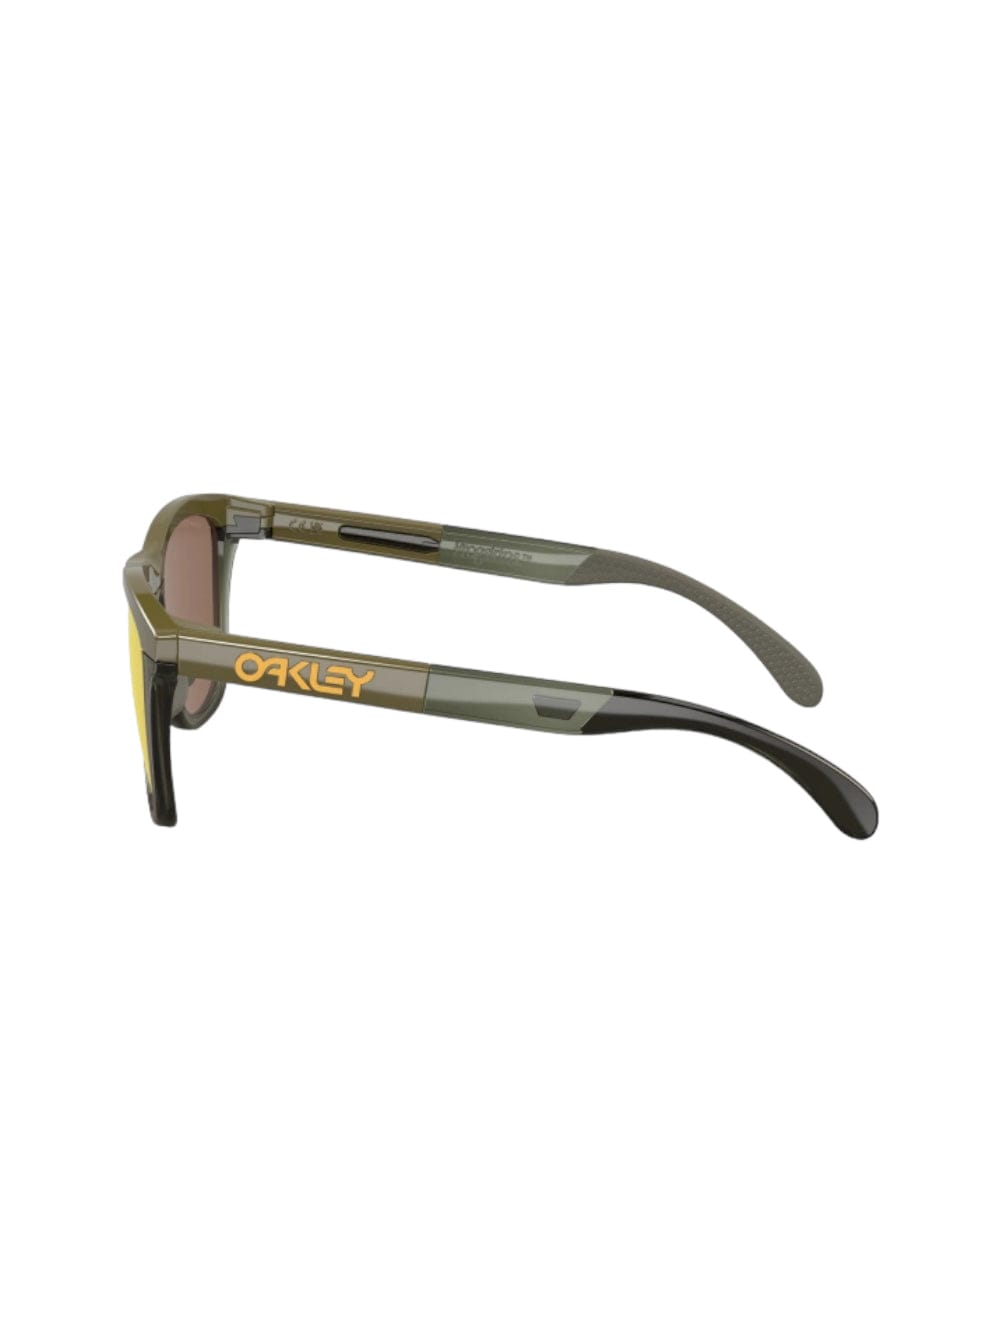 Shop Oakley Frogskins Range - 9284 Sunglasses